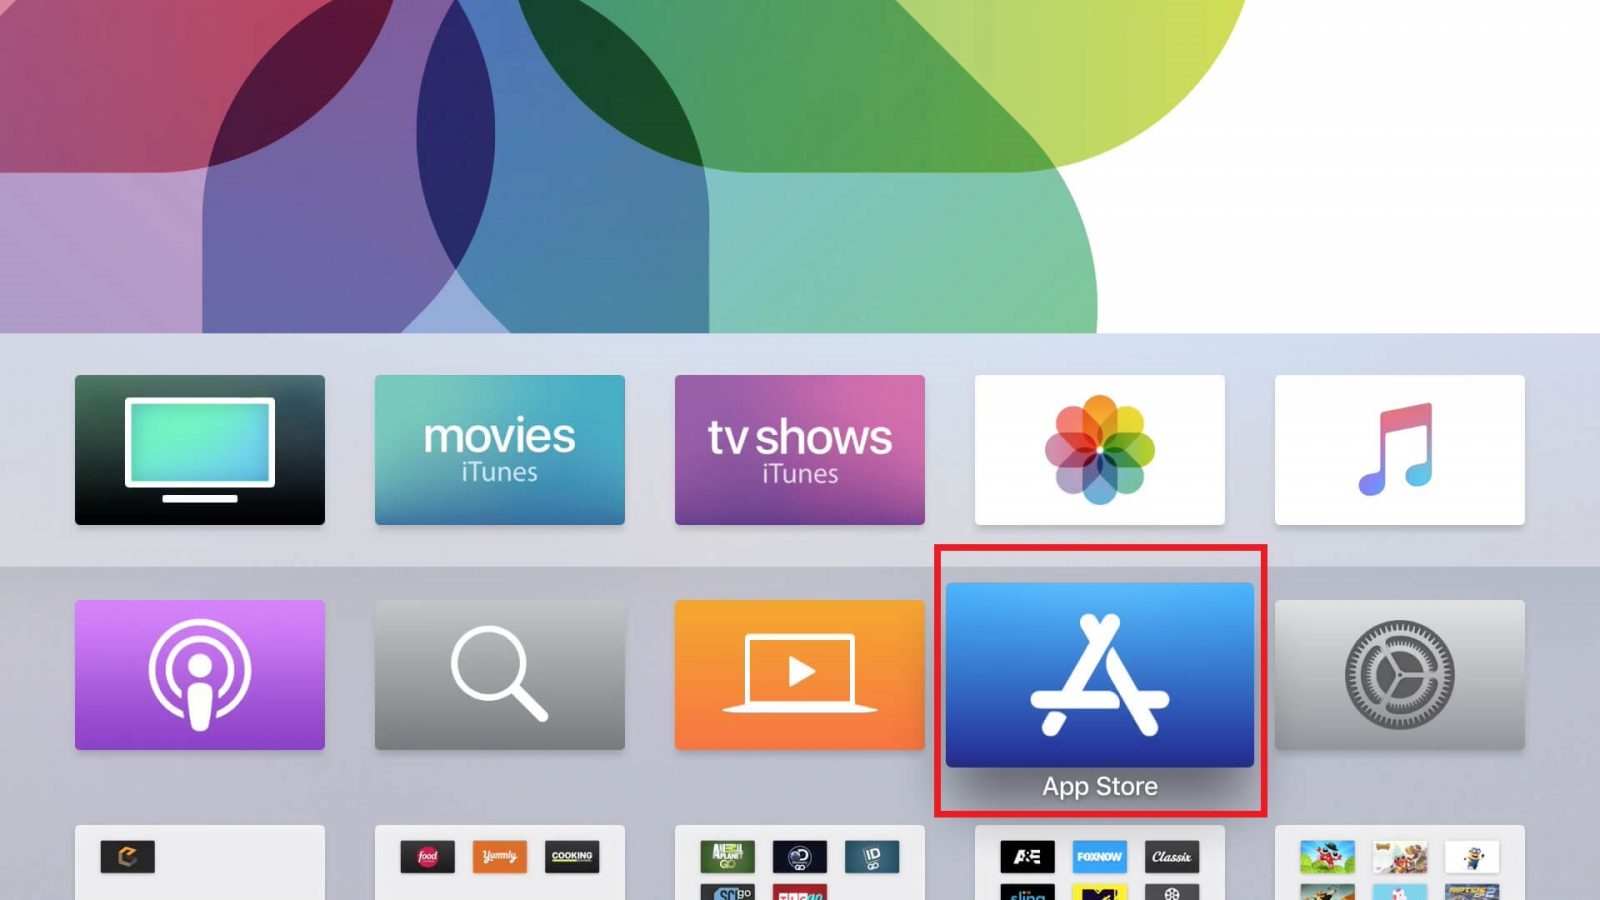 apple tv 4k plex app